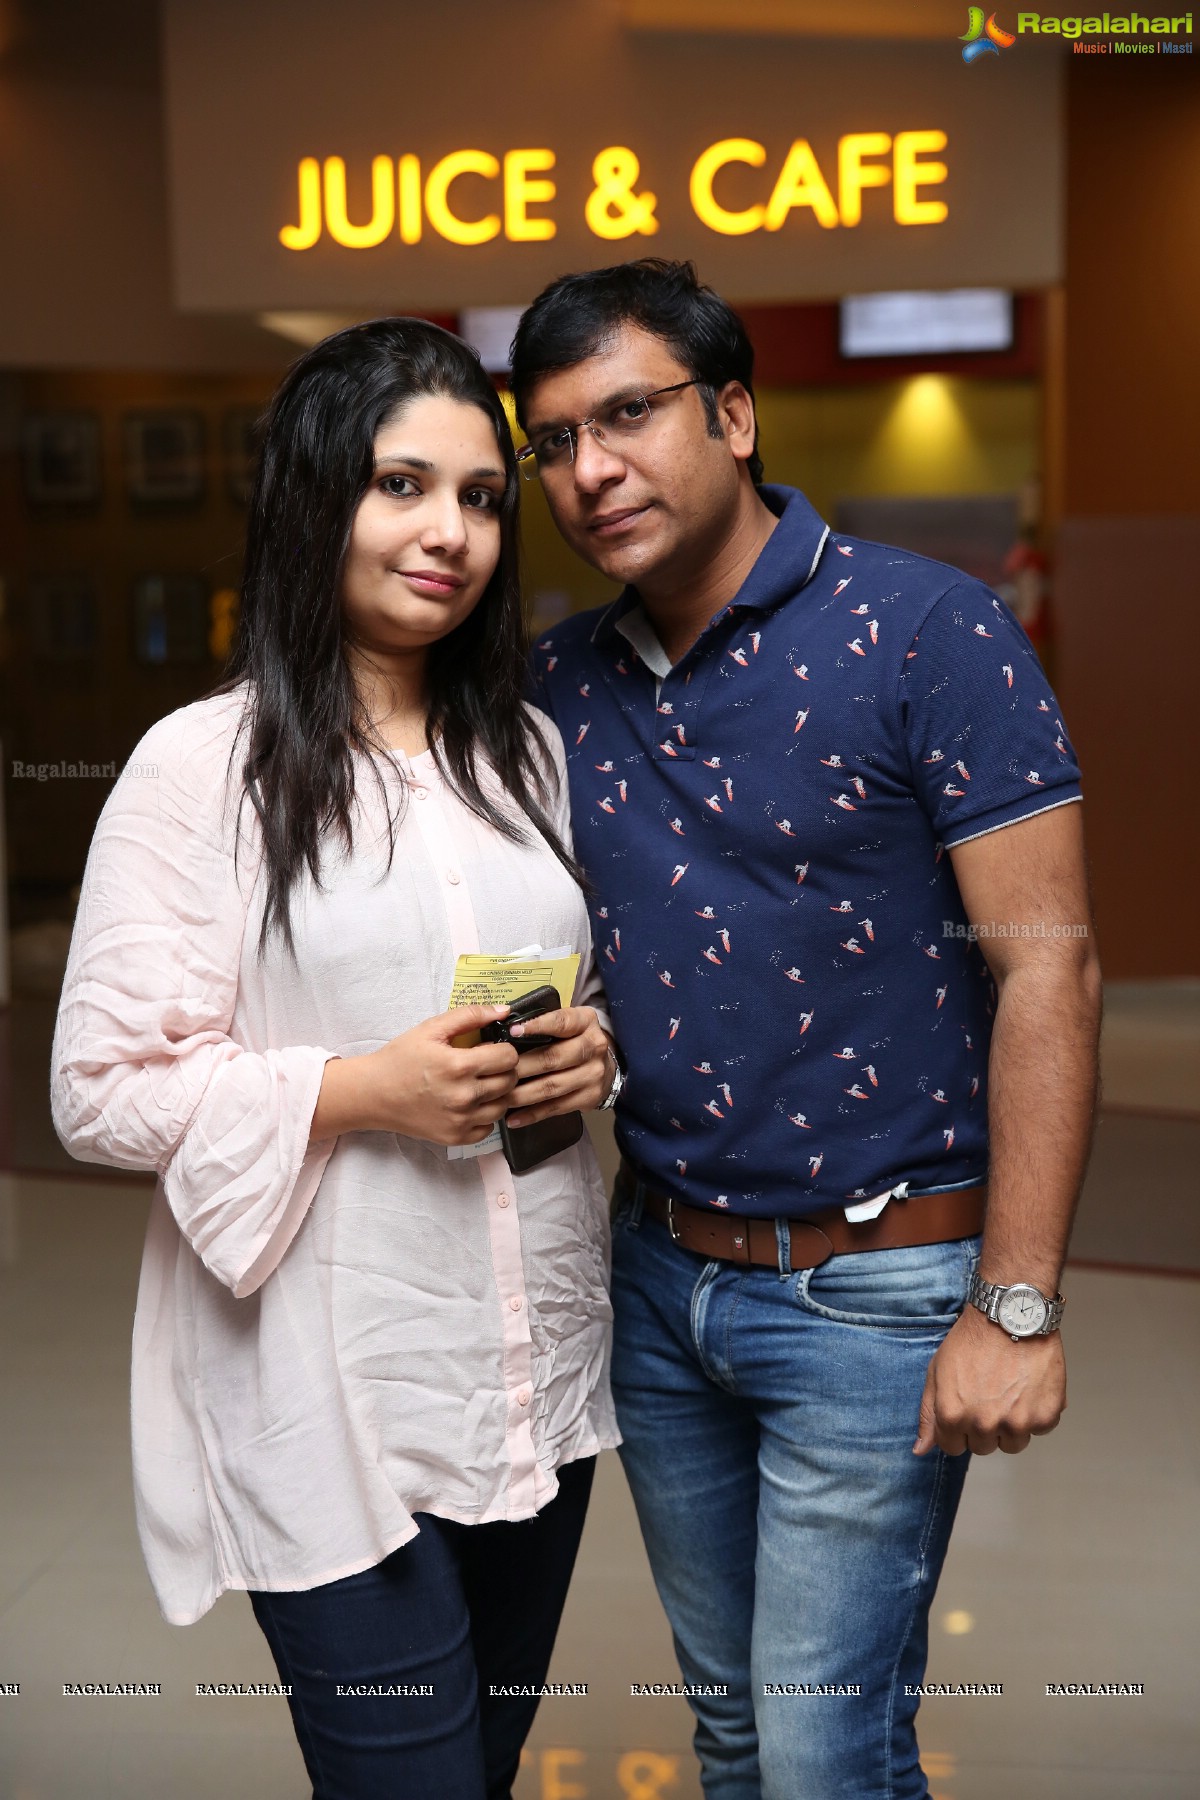 Veere Di Wedding - Neeru's Exclusive Screening at PVR Banjara Hills, Hyderabad